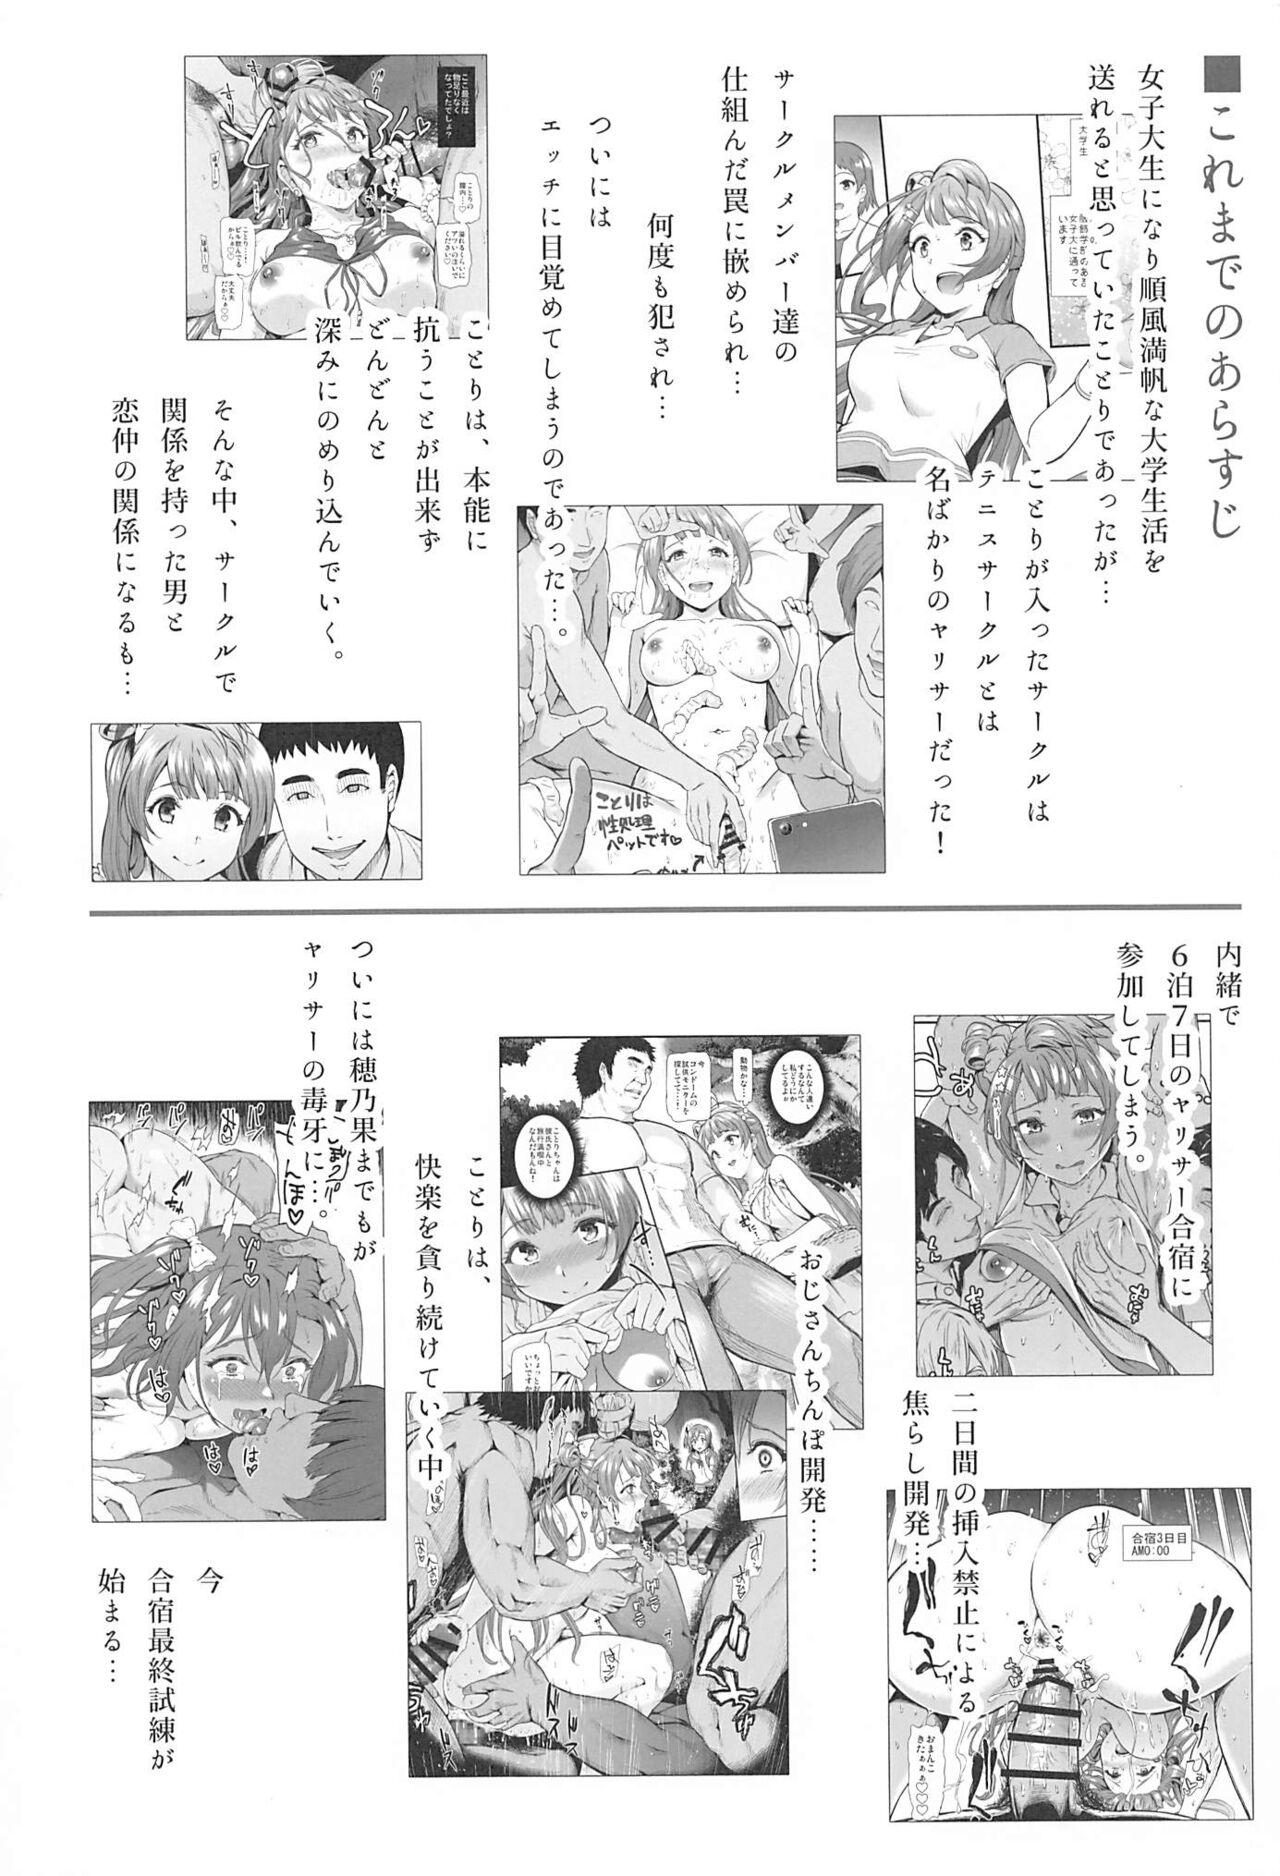 Curious Joshidaisei Minami Kotori no YariCir Jikenbo Case. 5 - Love live Lesbian Porn - Page 3